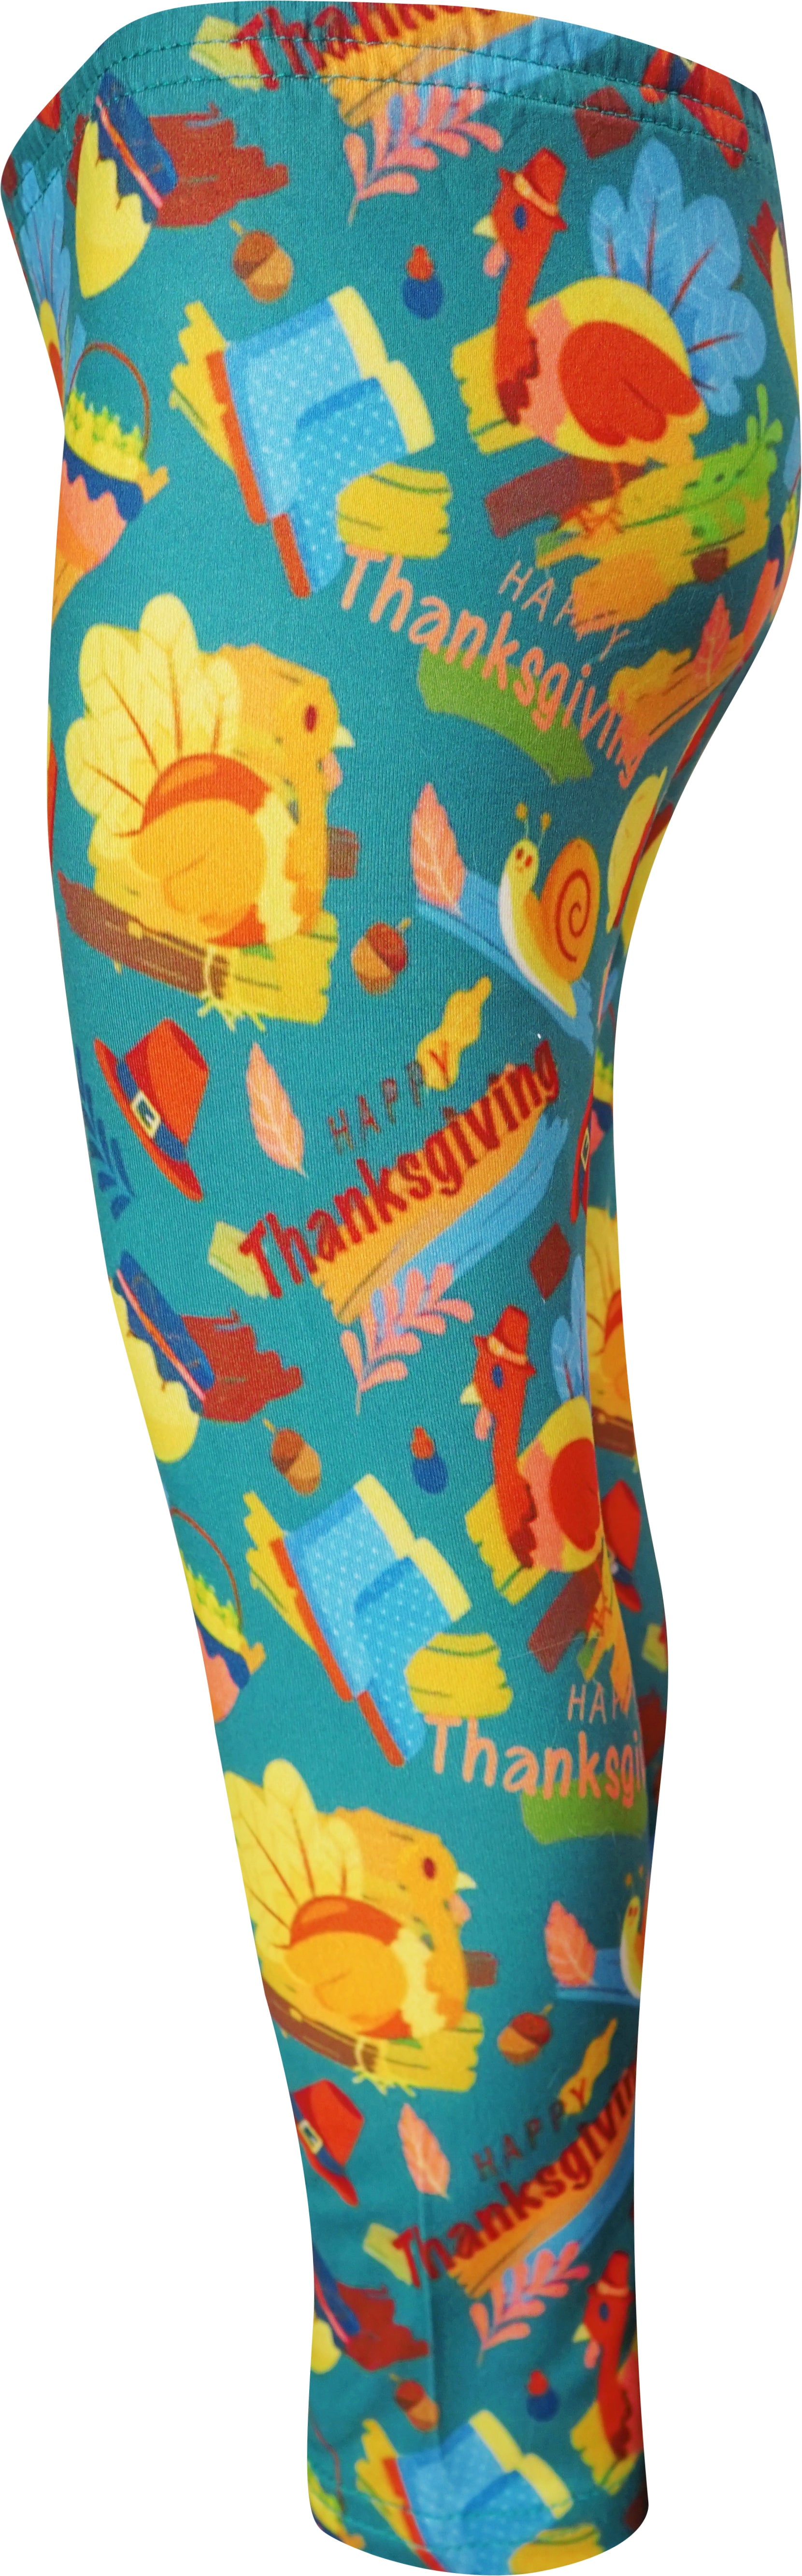 Baby Toddler Little Girls Thanksgiving Turkey Scarf Outfit - Orange Teal - Angeline Kids